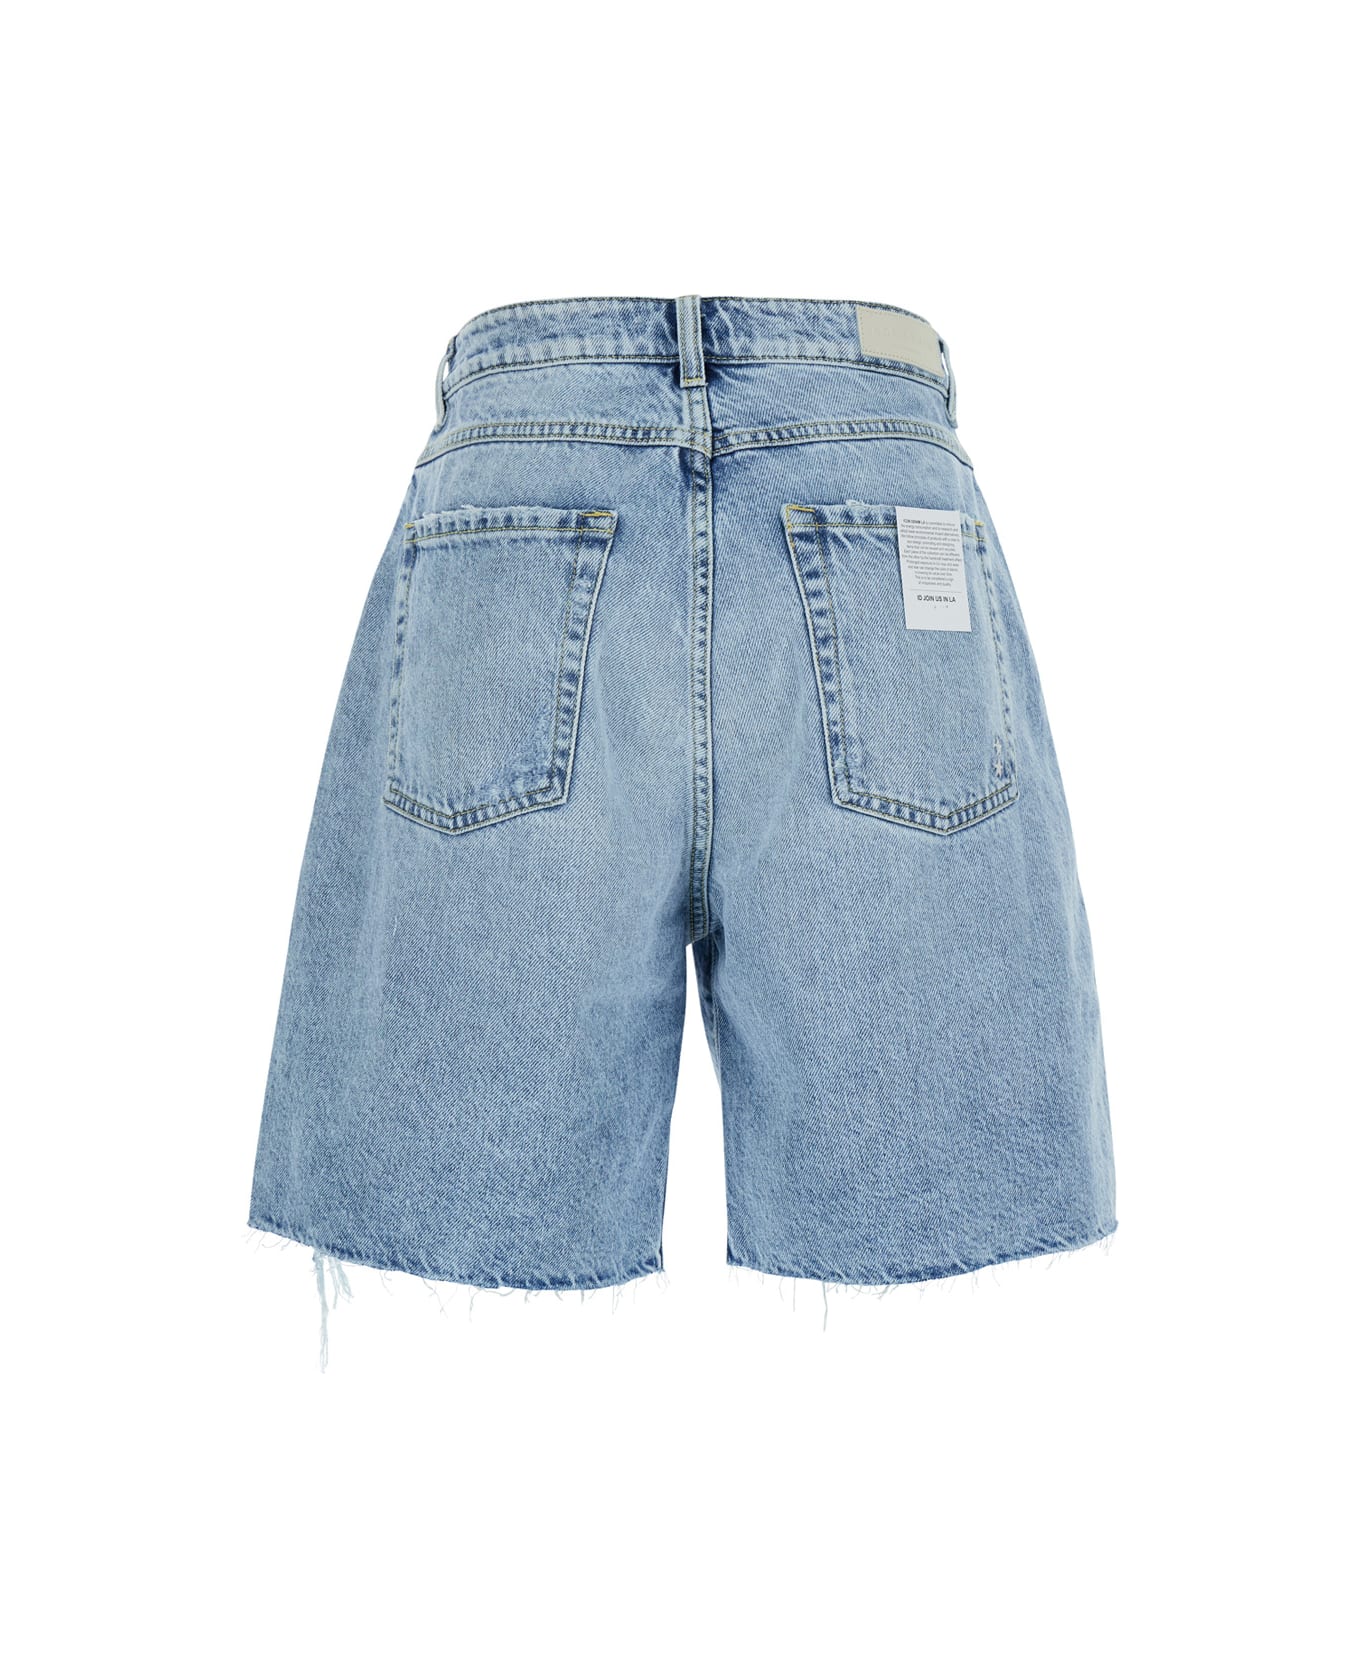 Icon Denim 'lea' Light Blue Bermuda Shorts With Rips In Cotton Denim Woman - Light blue